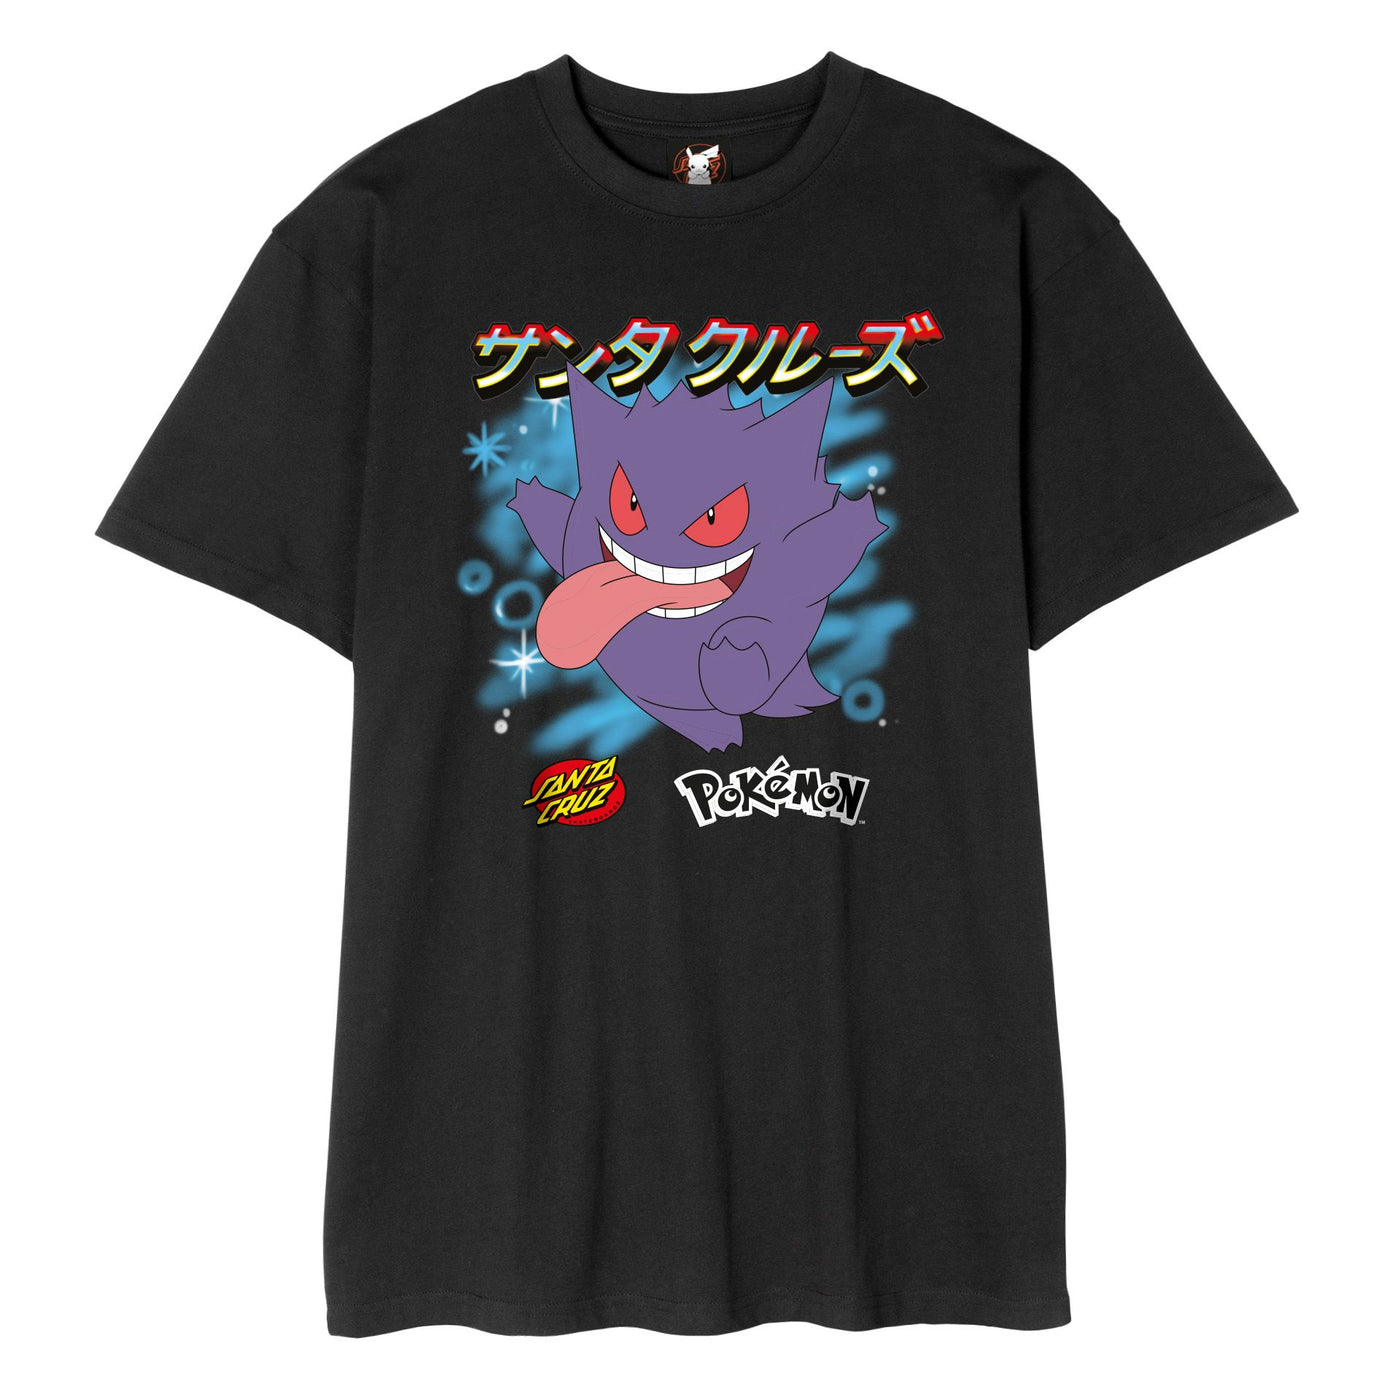 T-Shirt Santa Cruz X Pokémon Fantôme Type 3 - Noir